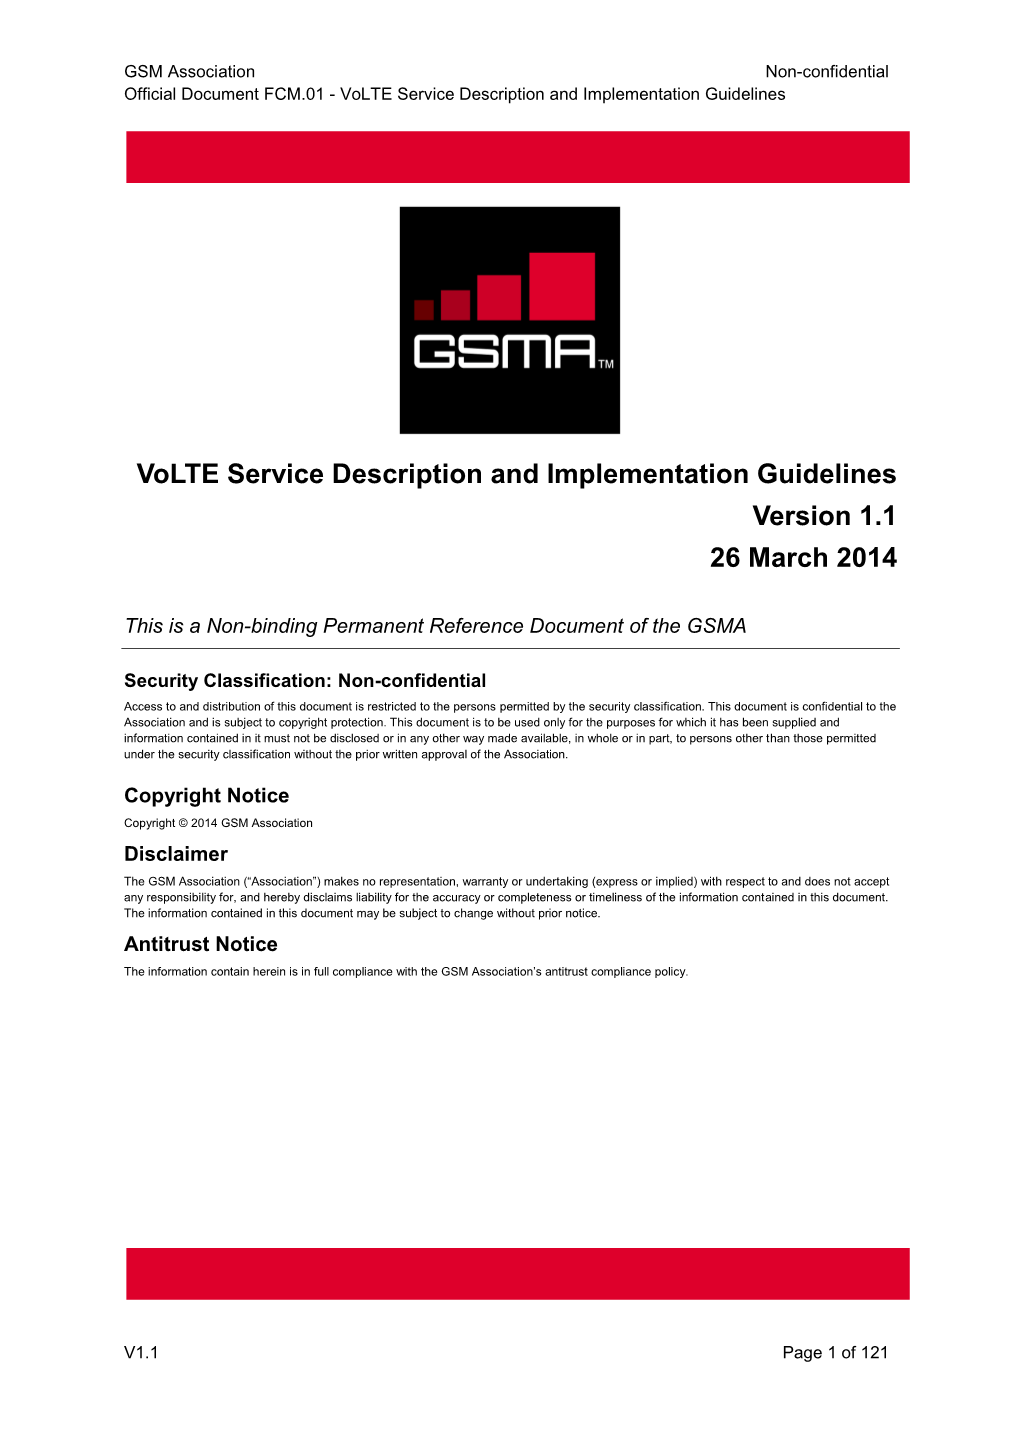 Volte Service Description and Implementation Guidelines Version 1.1 26 March 2014